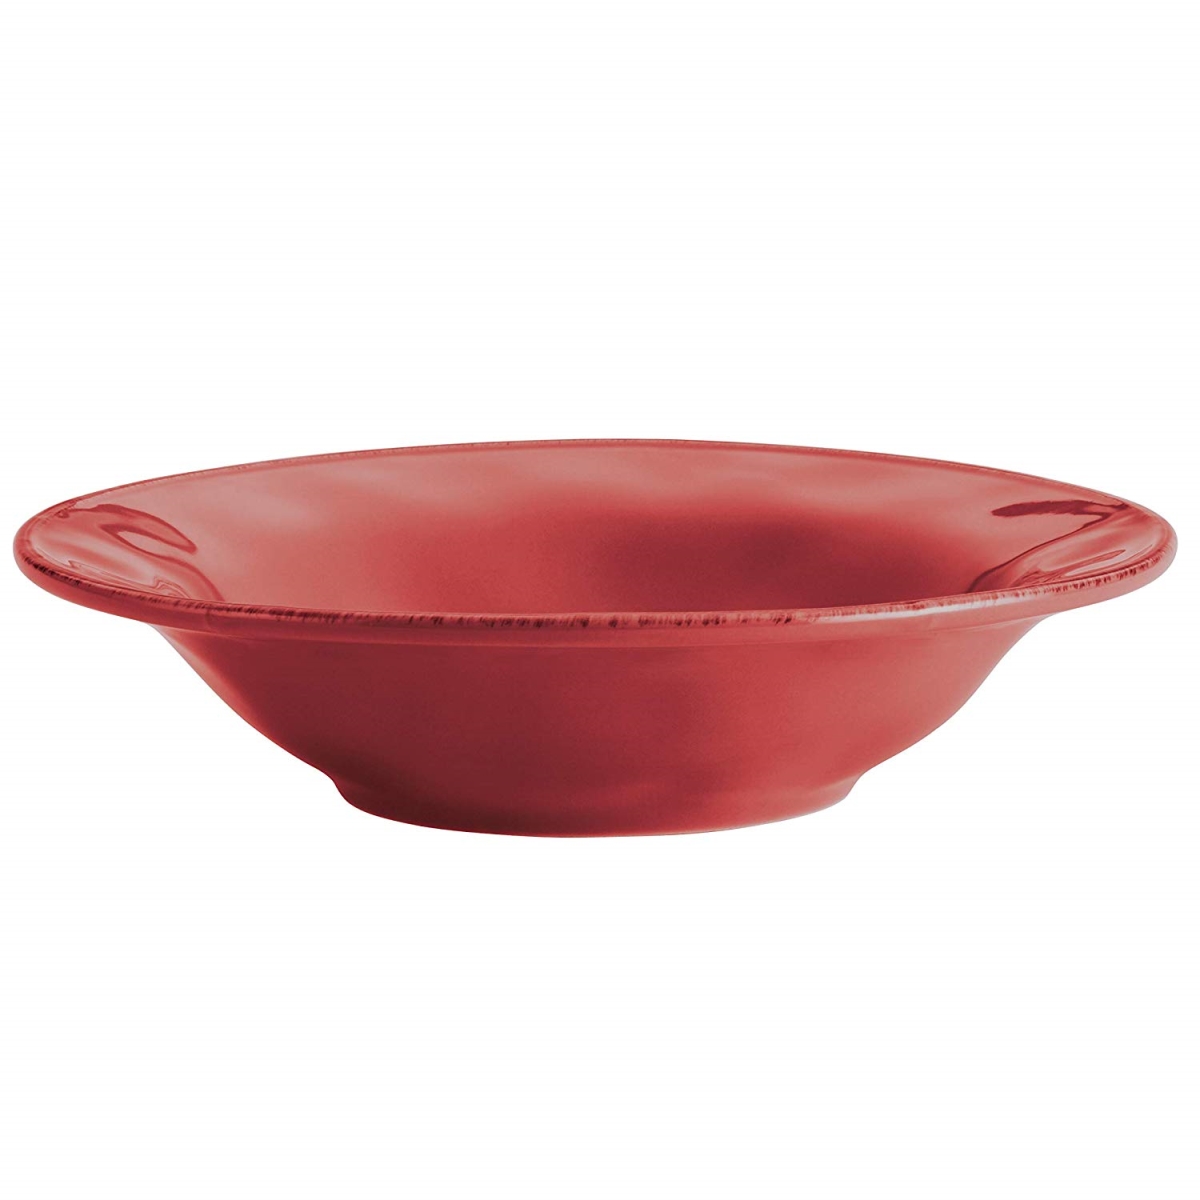 47928 10 In. Cucina Dinnerware Ceramic Round Serving Bowl, Cranberry Red